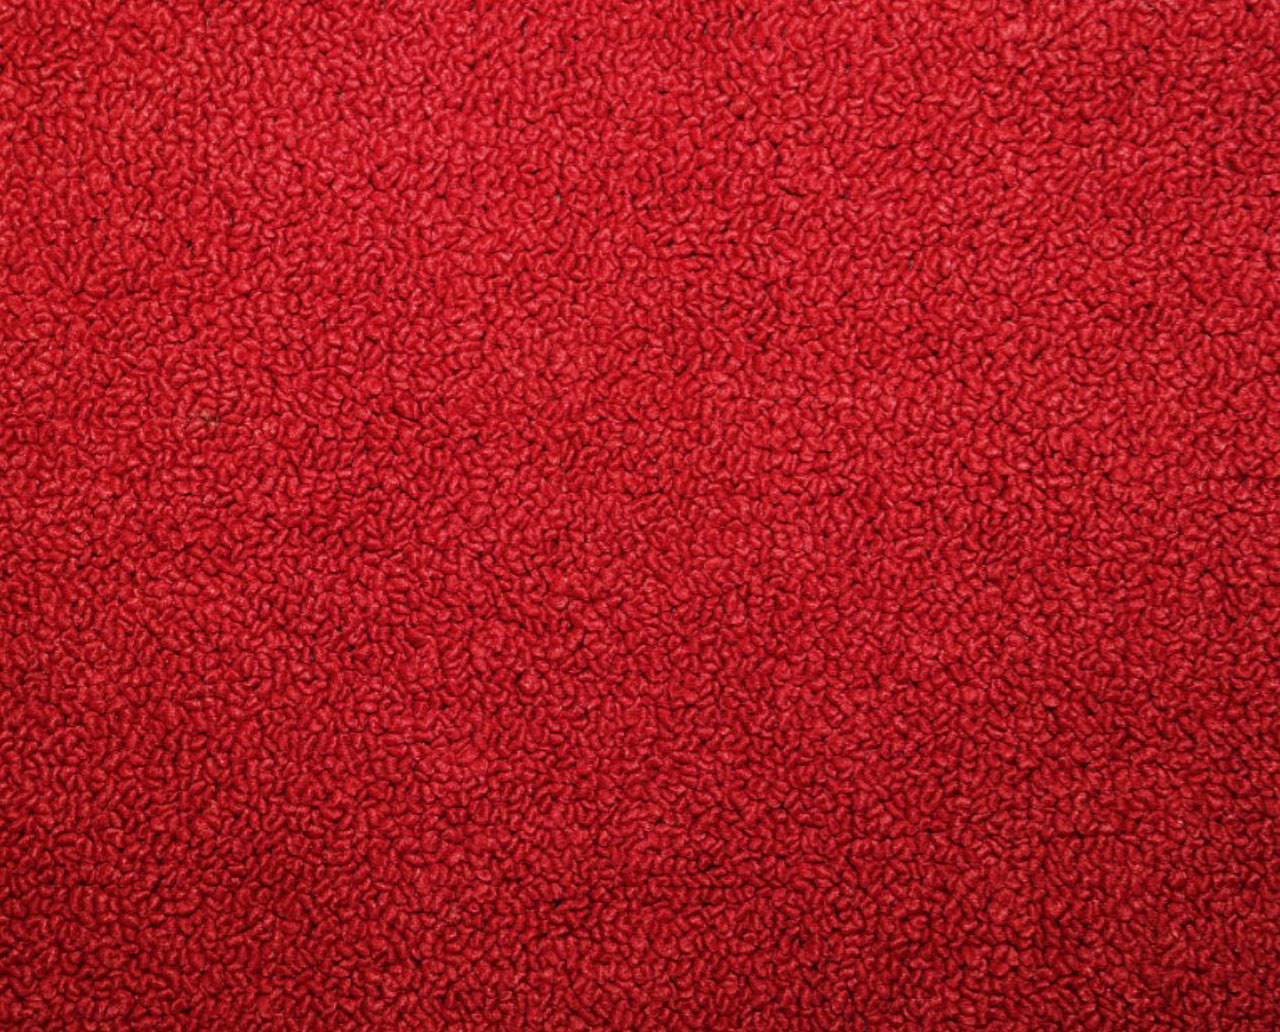 Holden Torana LJ Torana S Coupe 42F Baroque Red Carpet (Image 1 of 1)